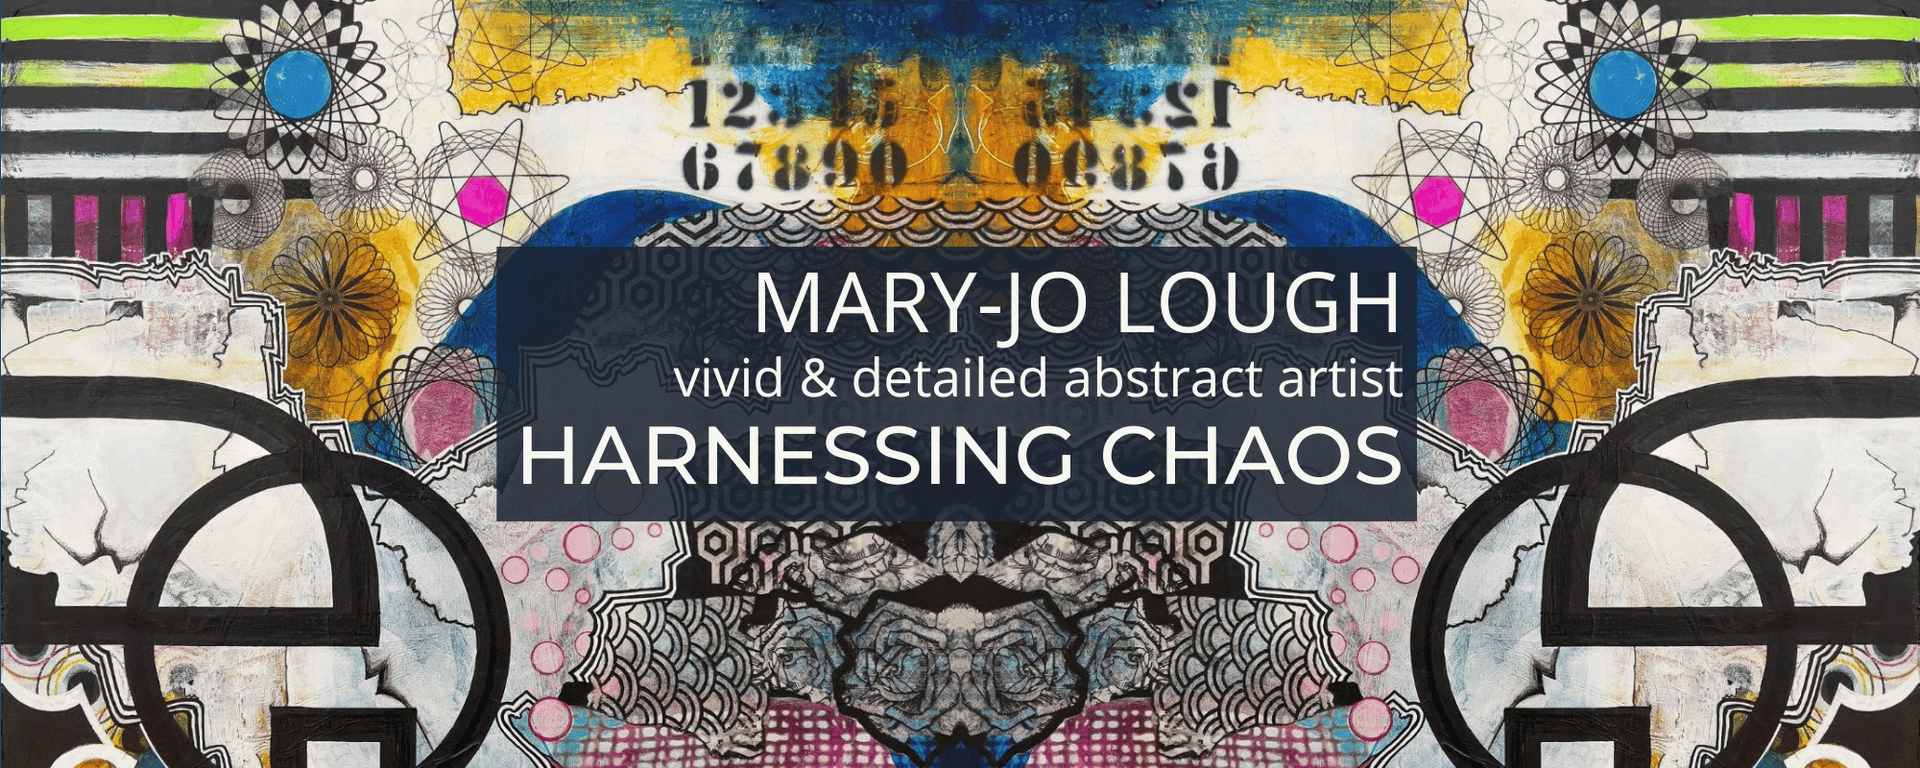 MJL Fine Art website banner featuring original art by local Calgary artist Mary-Jo Lough